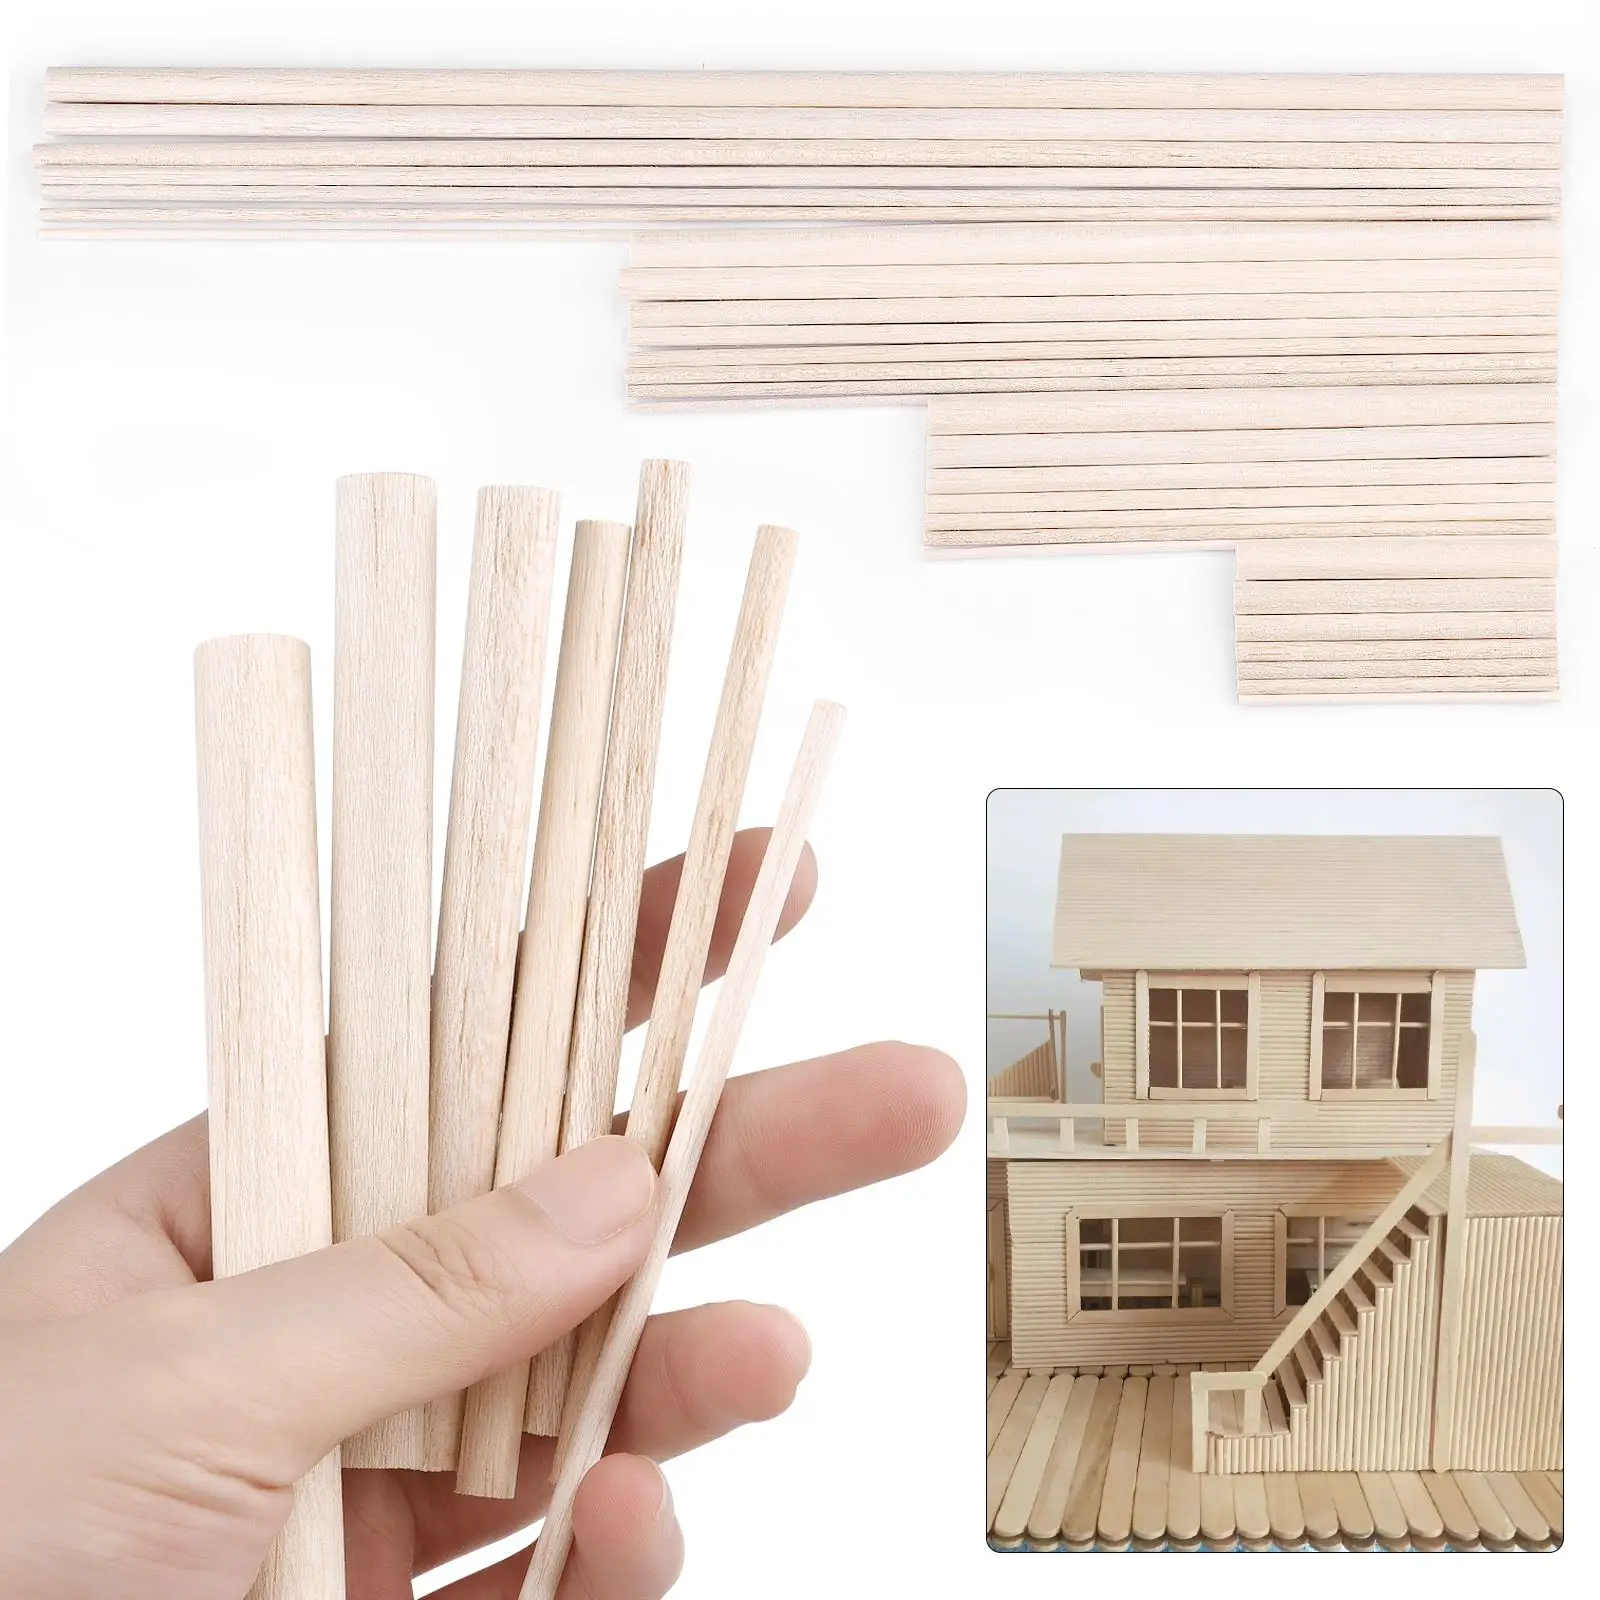 Wooden Craft Sticks Bulk, Wood Sticks for Crafts, Wooden Sticks